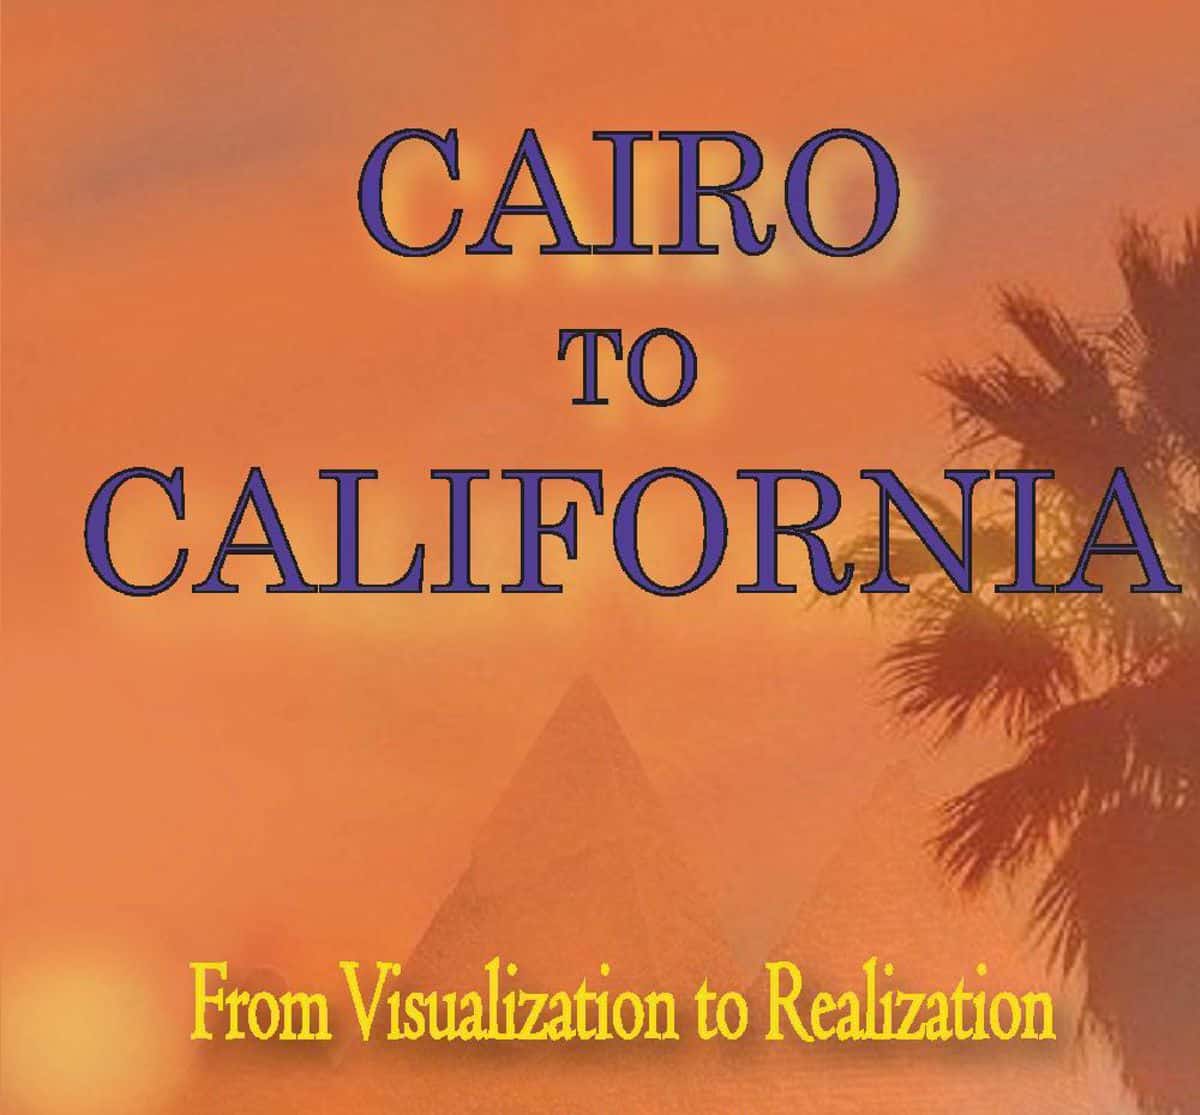 Bill Salem’s Cairo to California